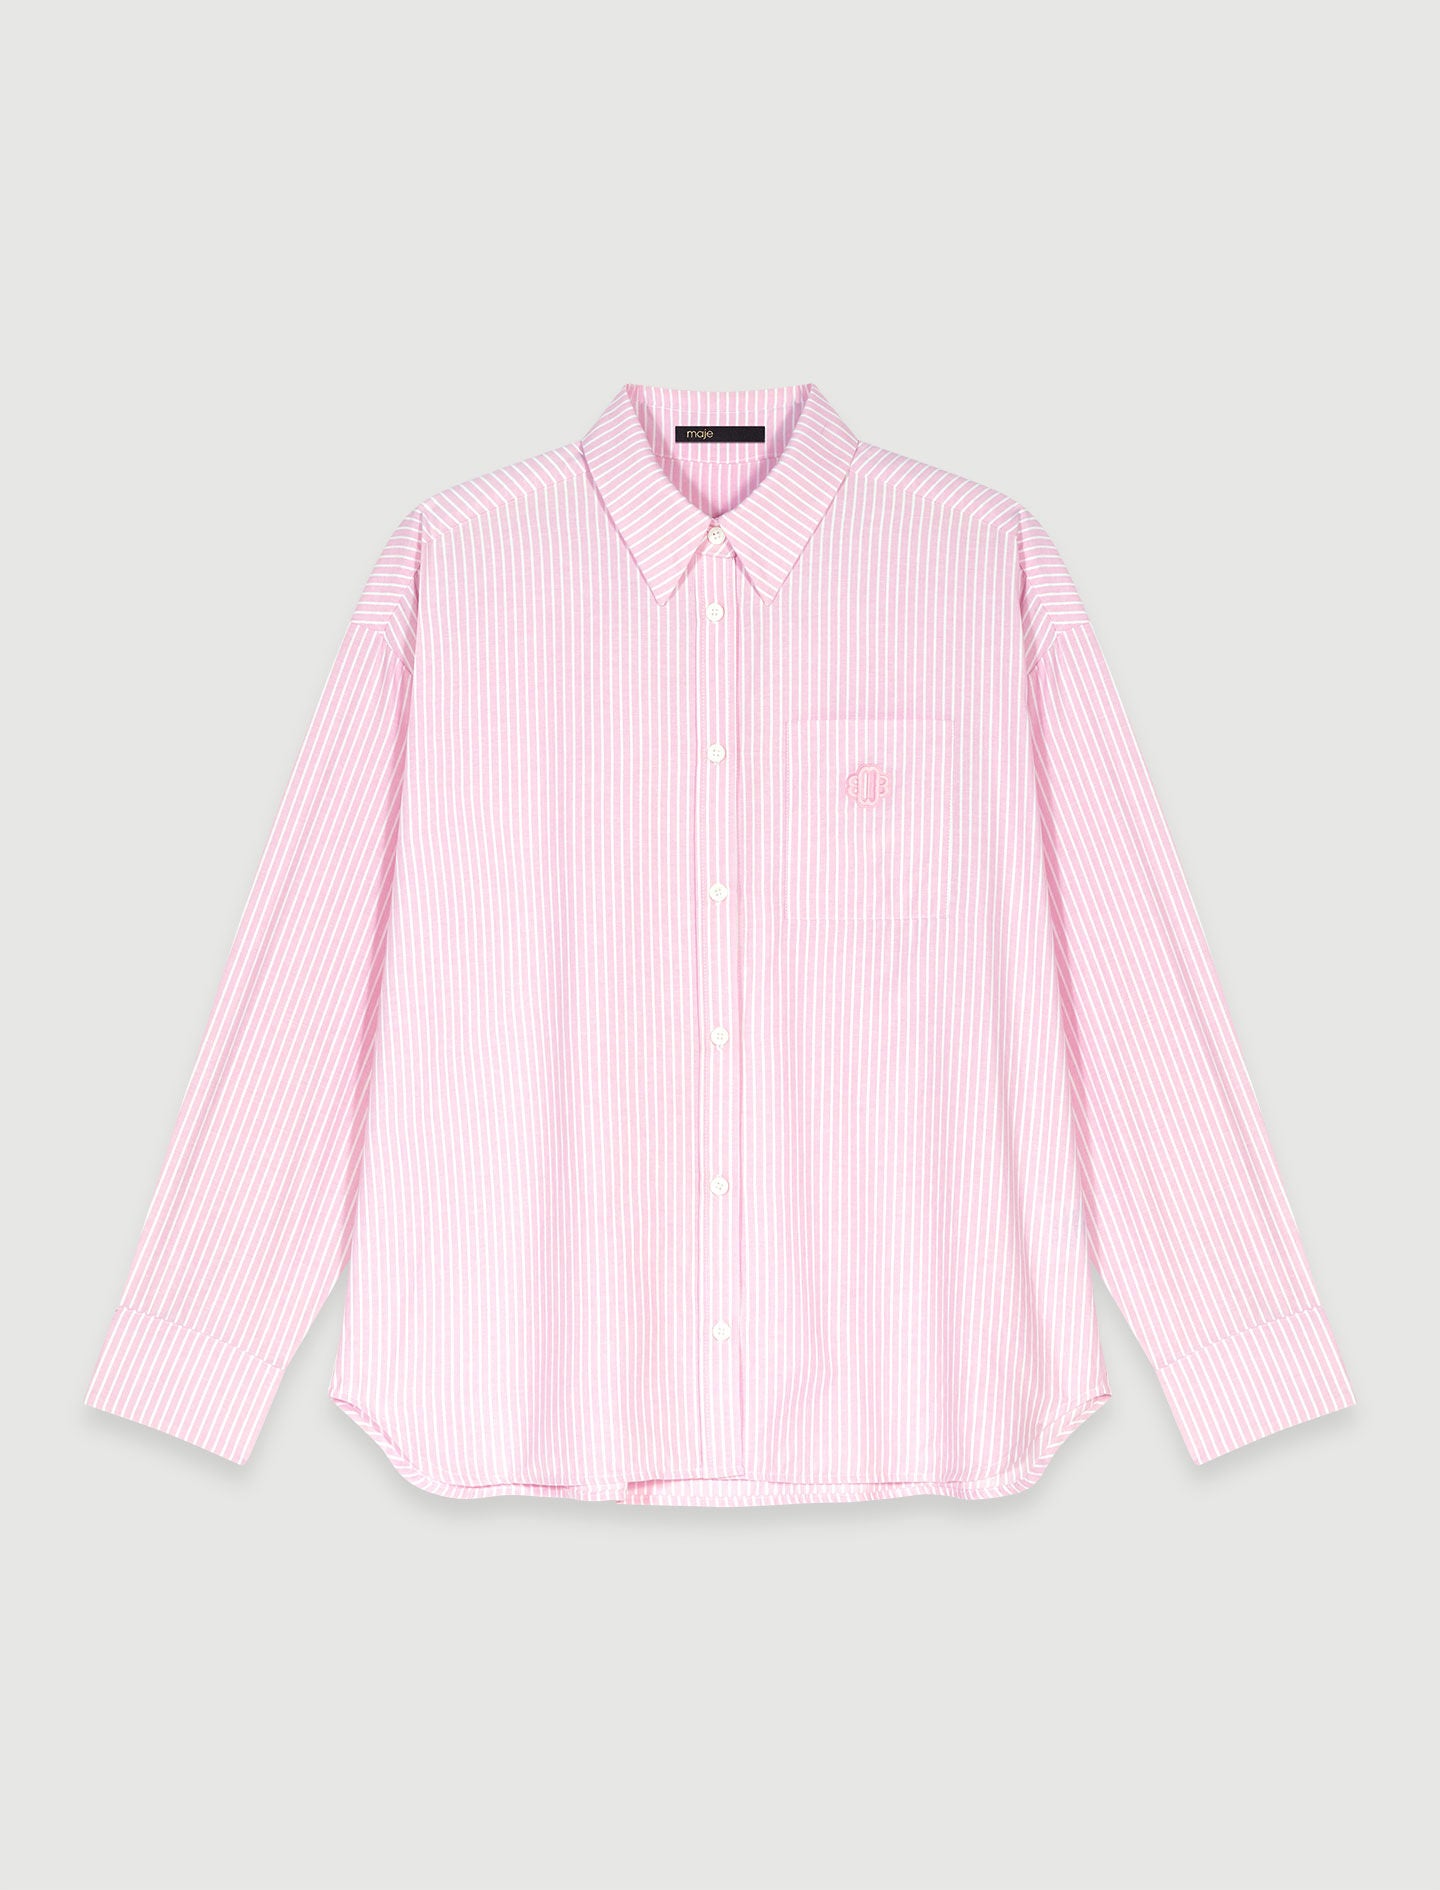 Pink-striped shirt